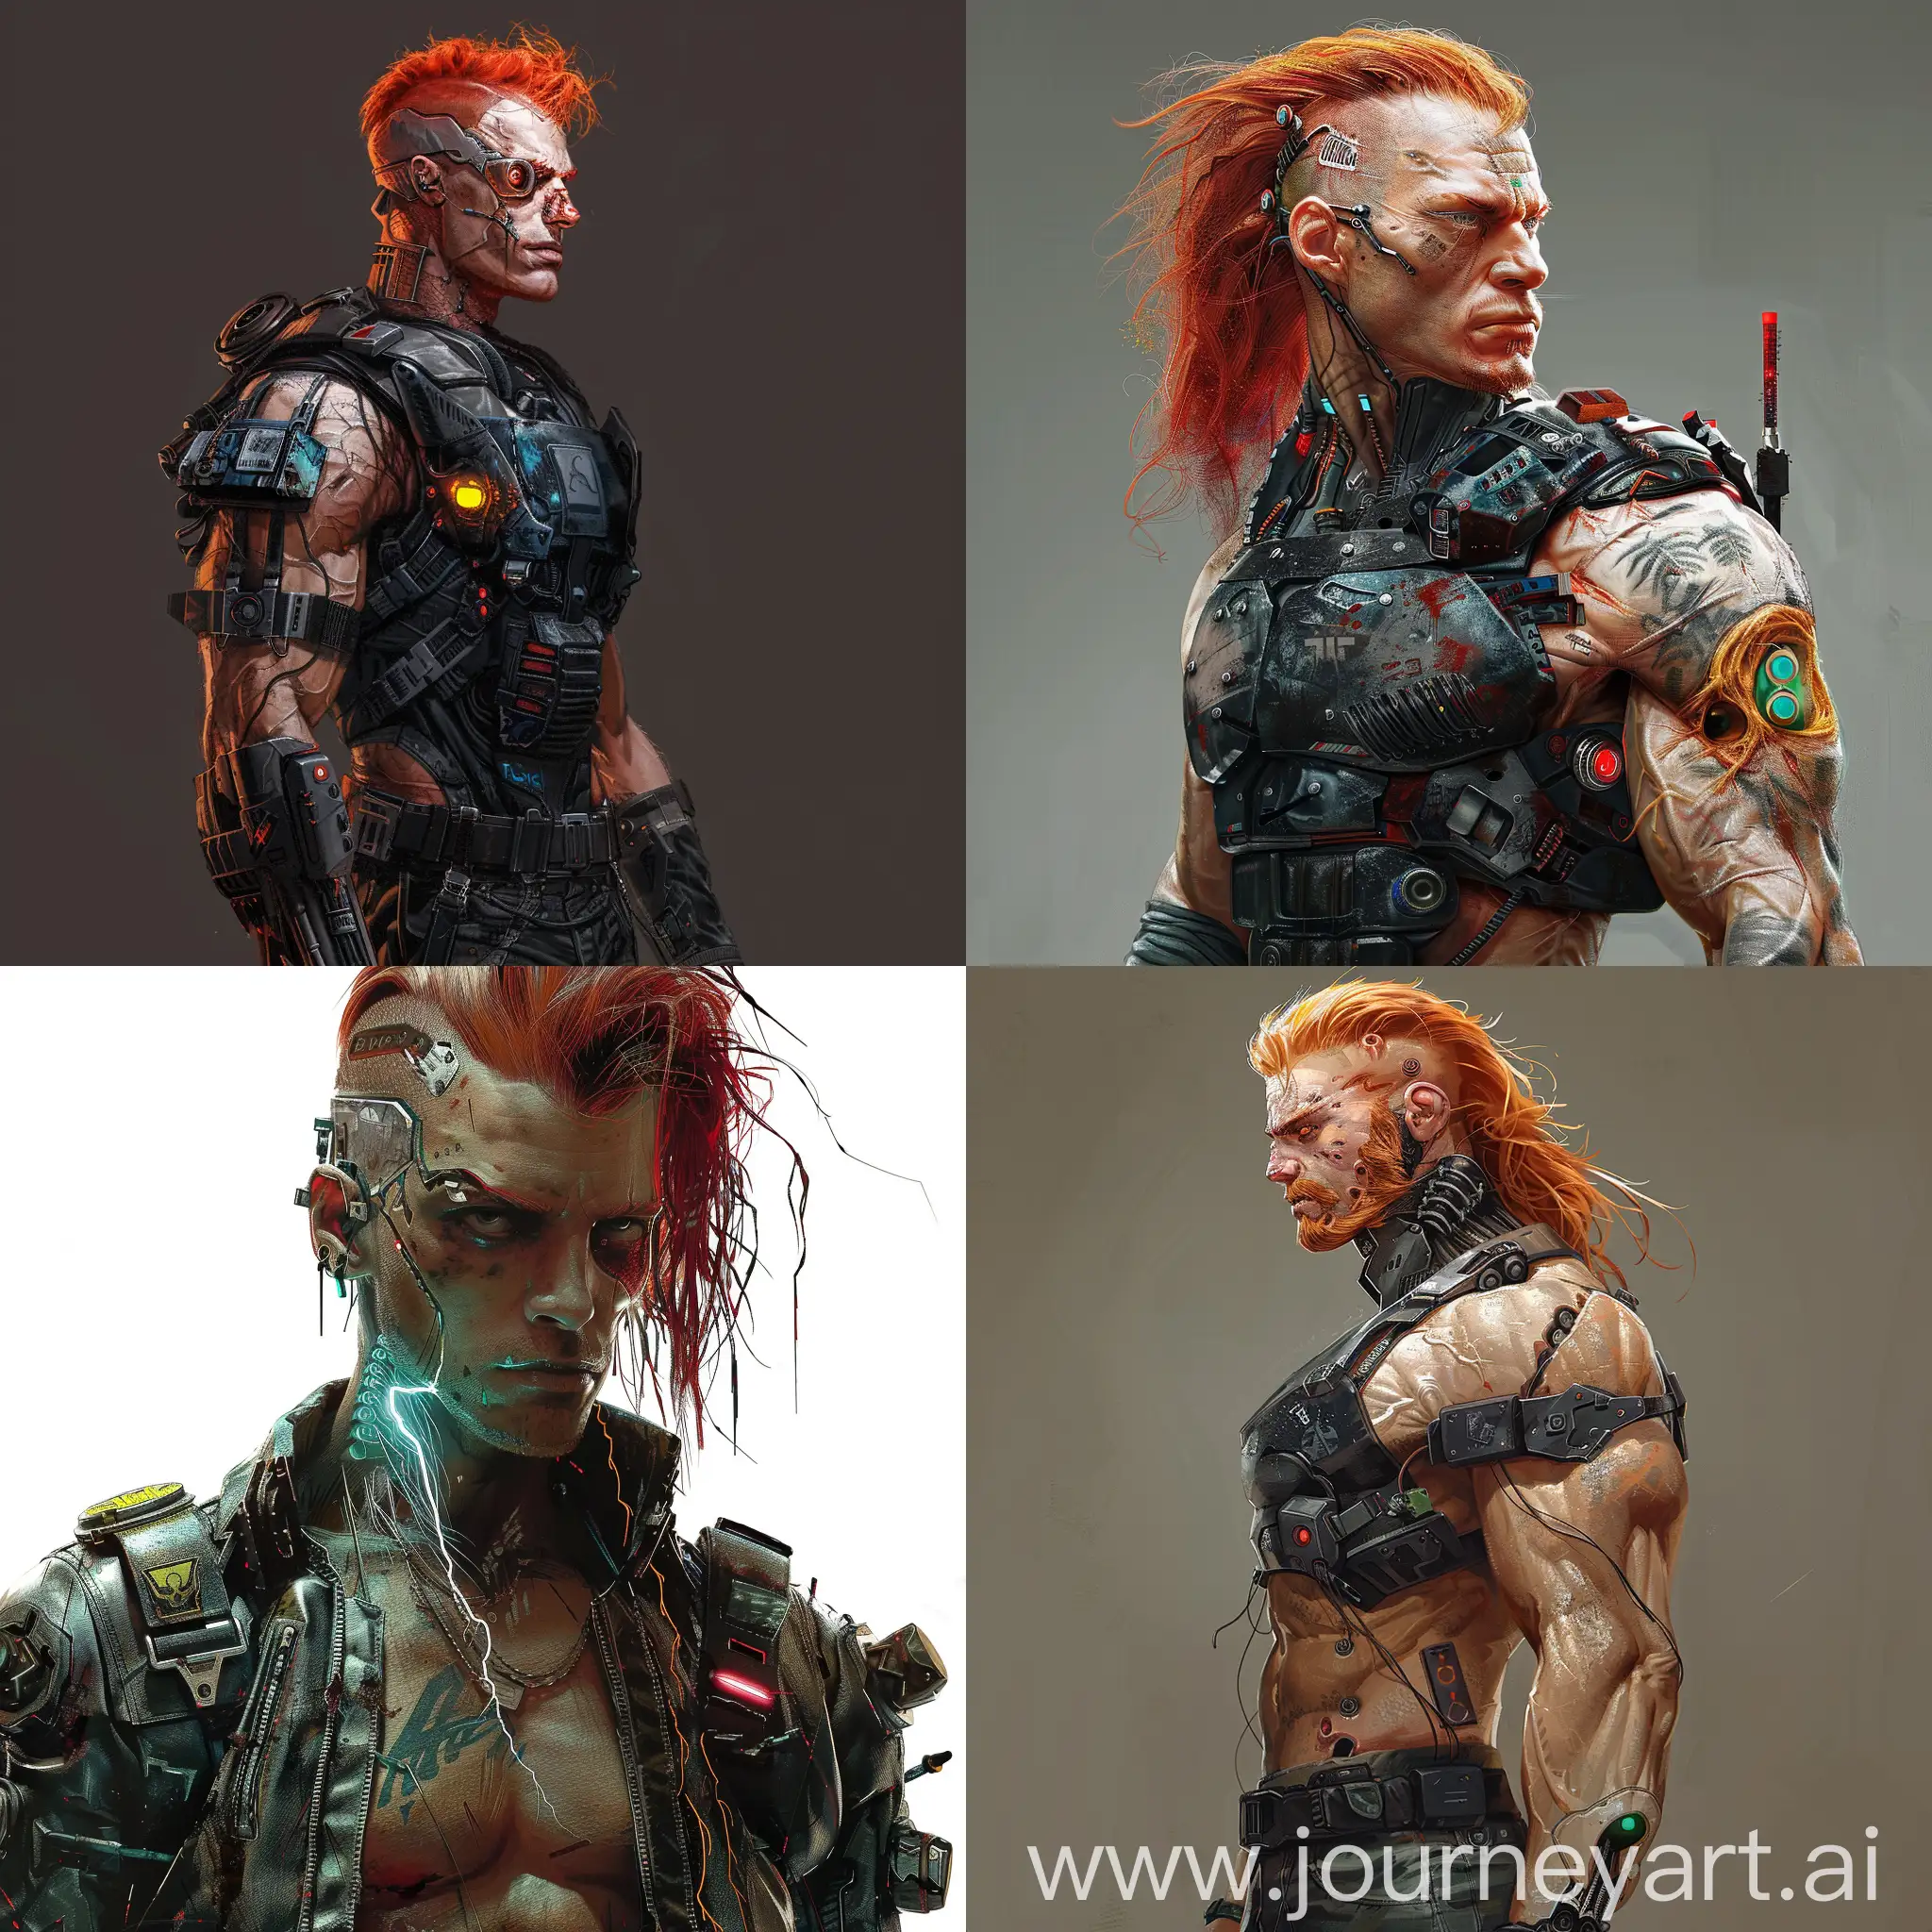 HyperRealistic-Cyberpunk-Man-with-Red-Hair-and-Cybernetic-Eye